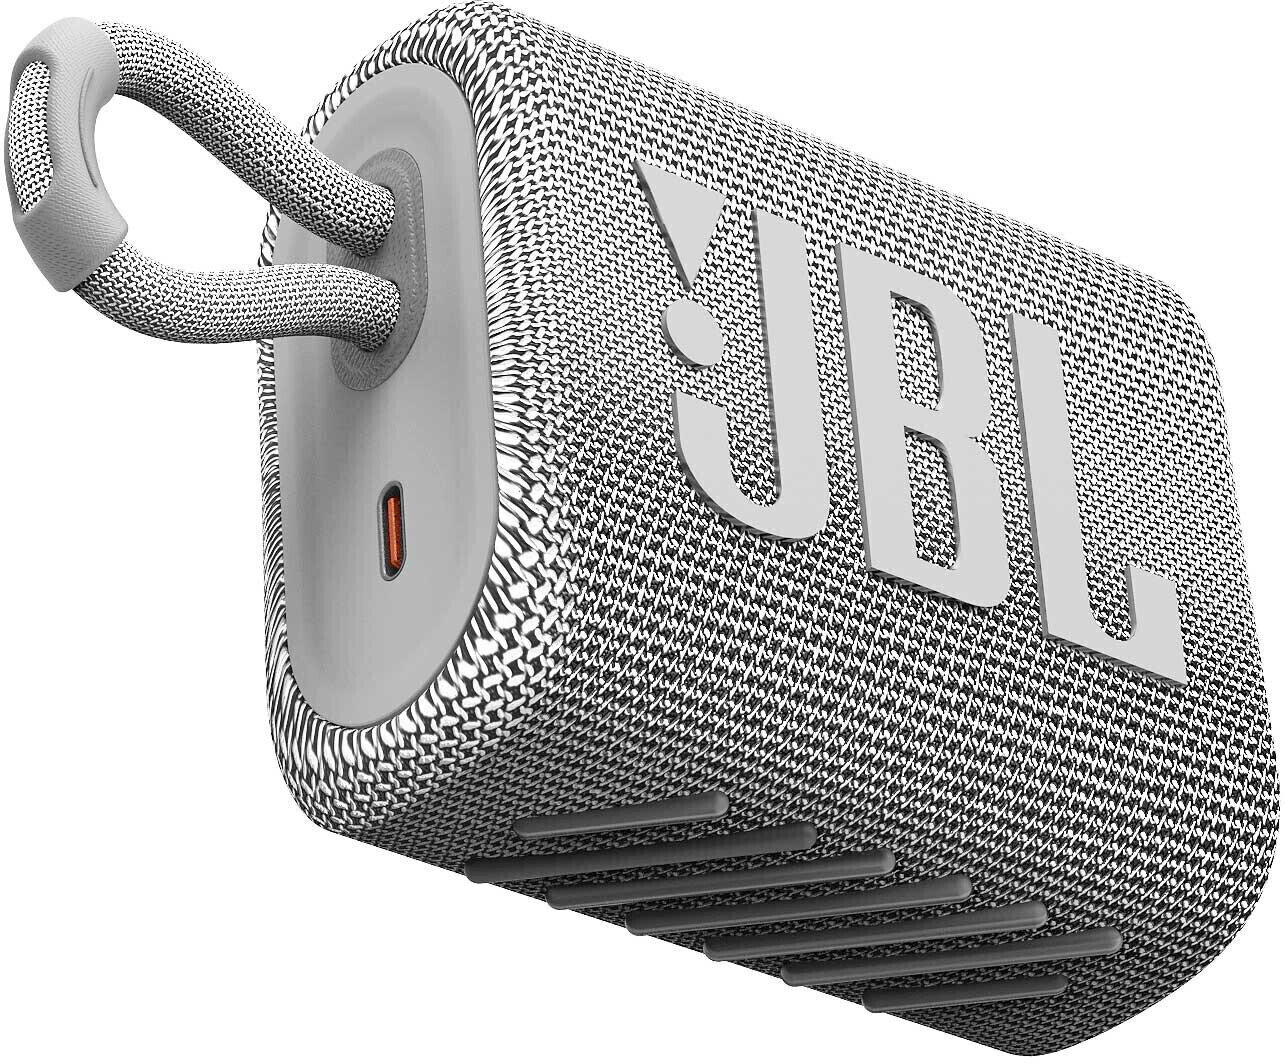 prenosný reproduktor JBL GO 3 White prenosný reproduktor